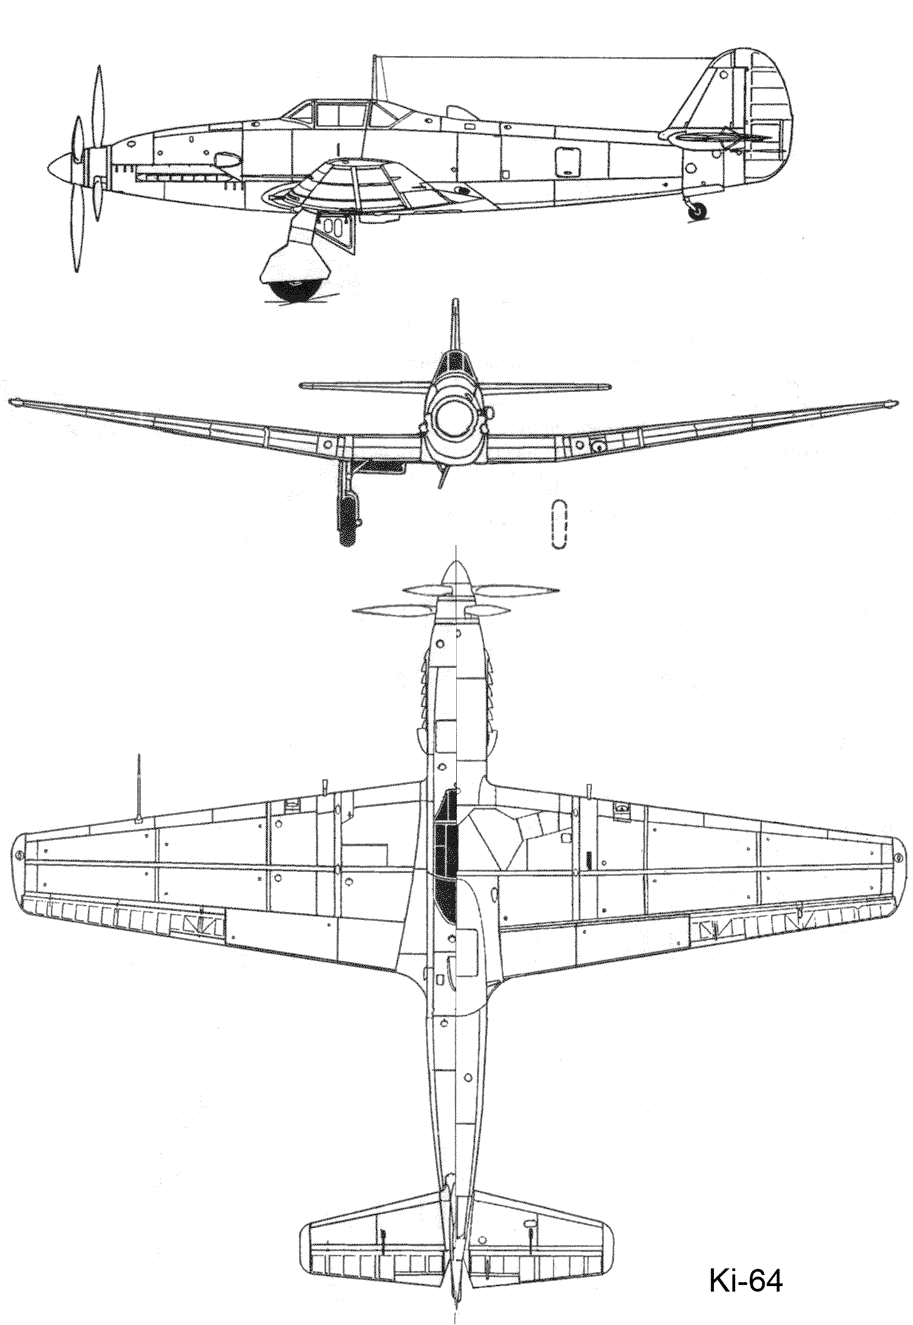 Kawasaki Ki-64 blueprint